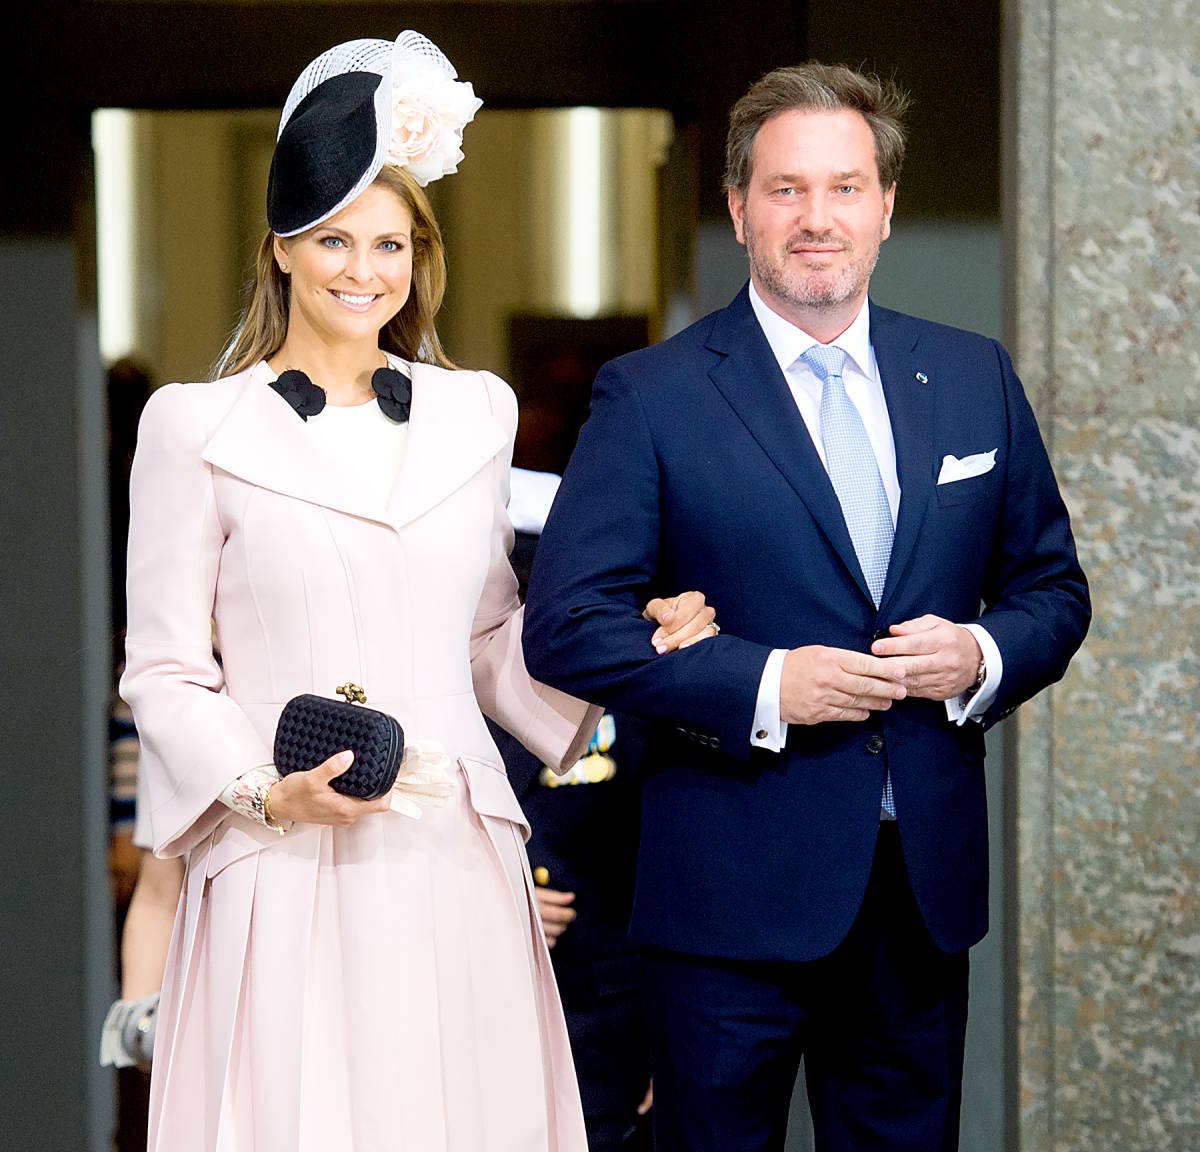 Sweden's Princess Madeleine gives birth to a son